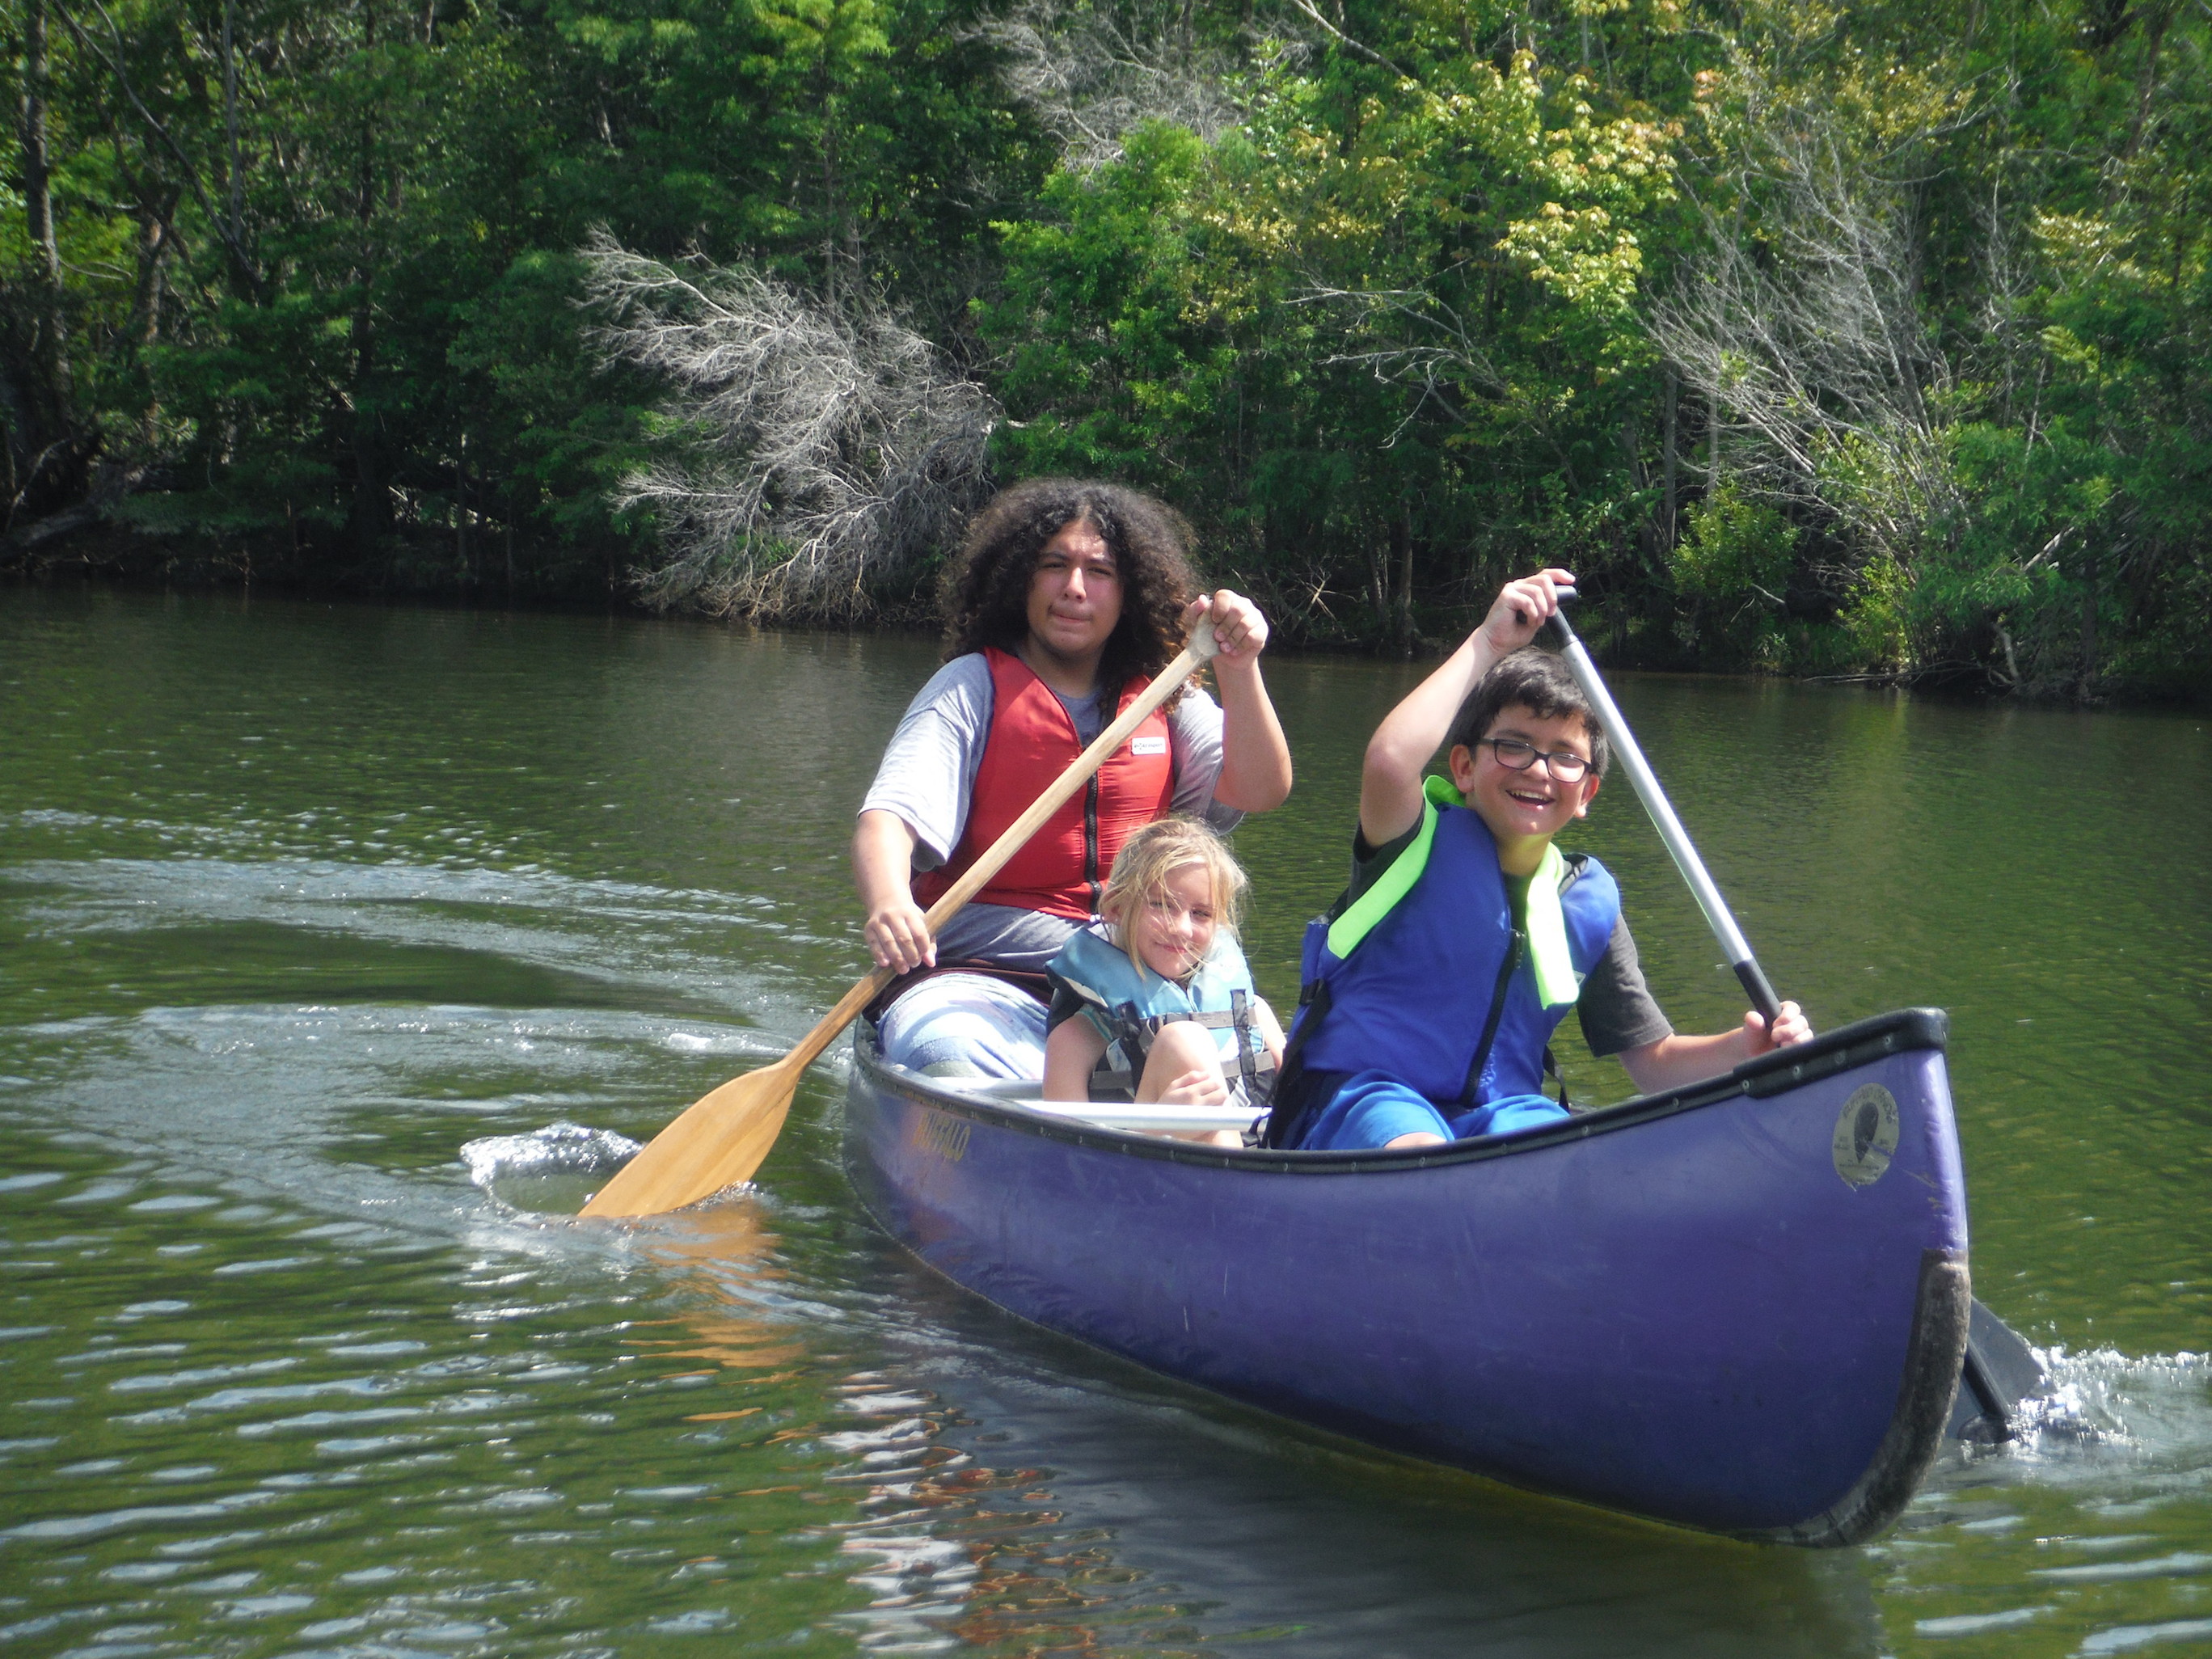 Success at canoe camp